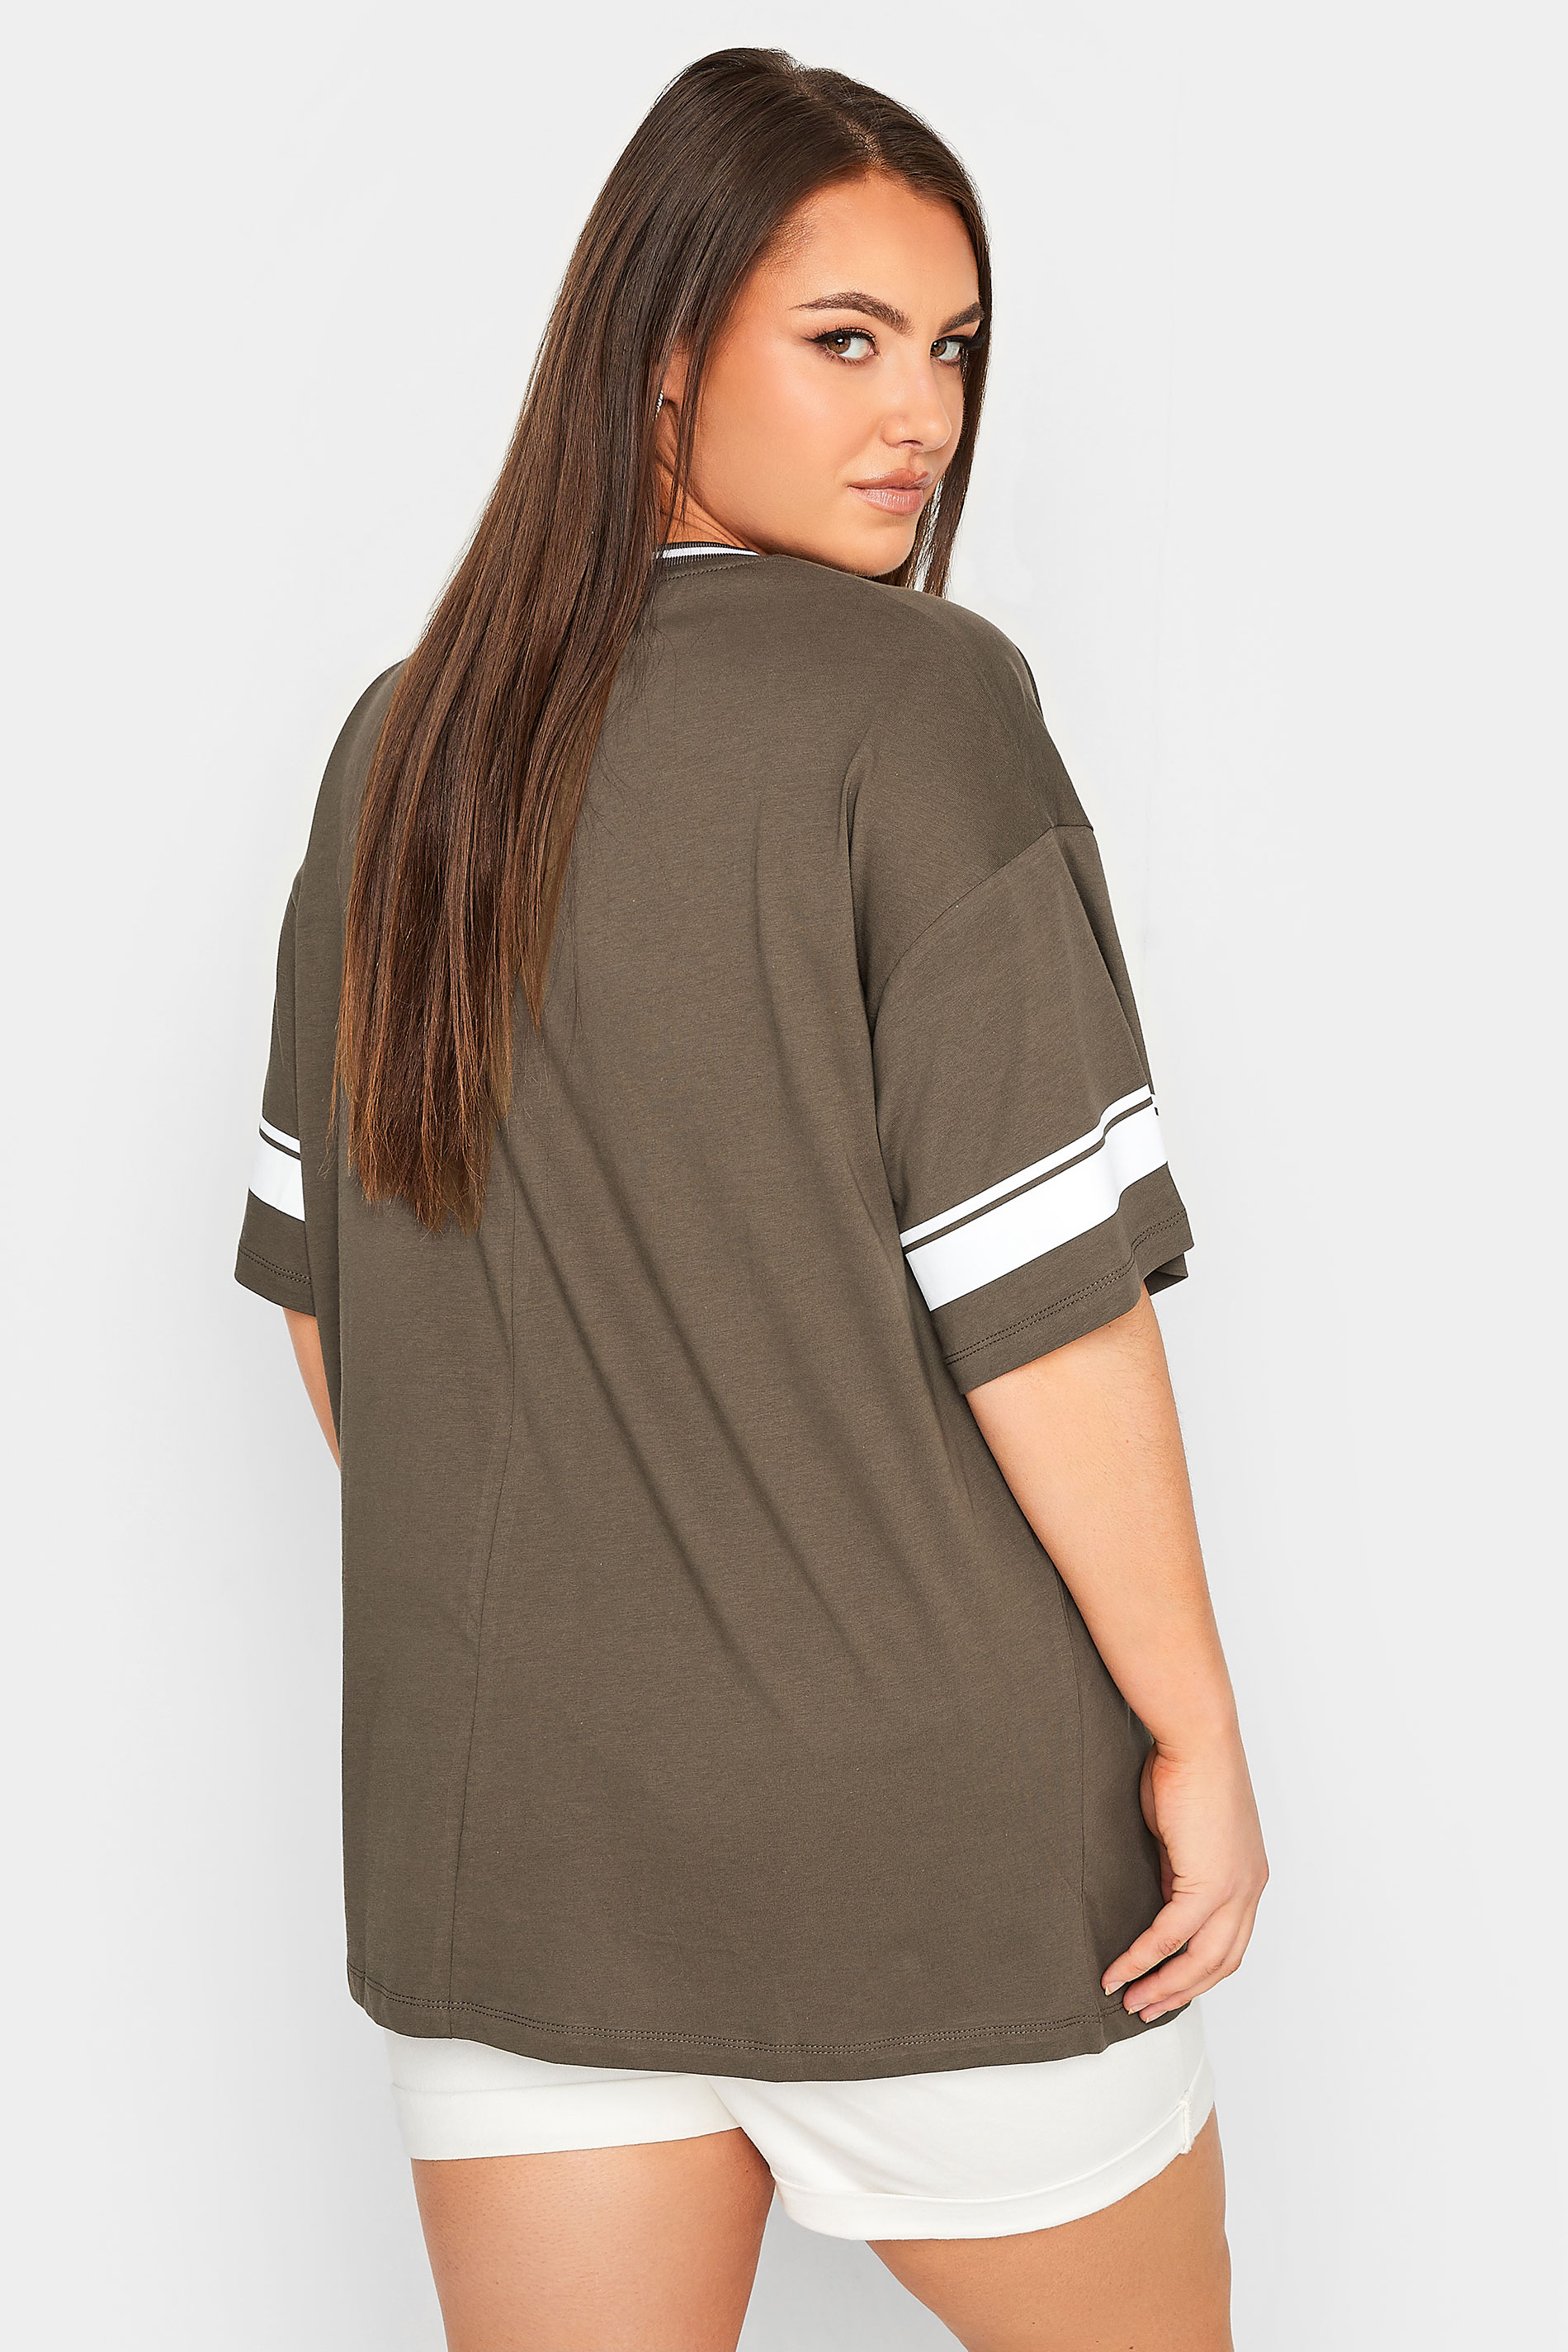 Plus Size Yours Curve Khaki Green 'New York' Slogan Varsity Tshirt Size 26-28 | Women's Plus Size and Curve Fashion